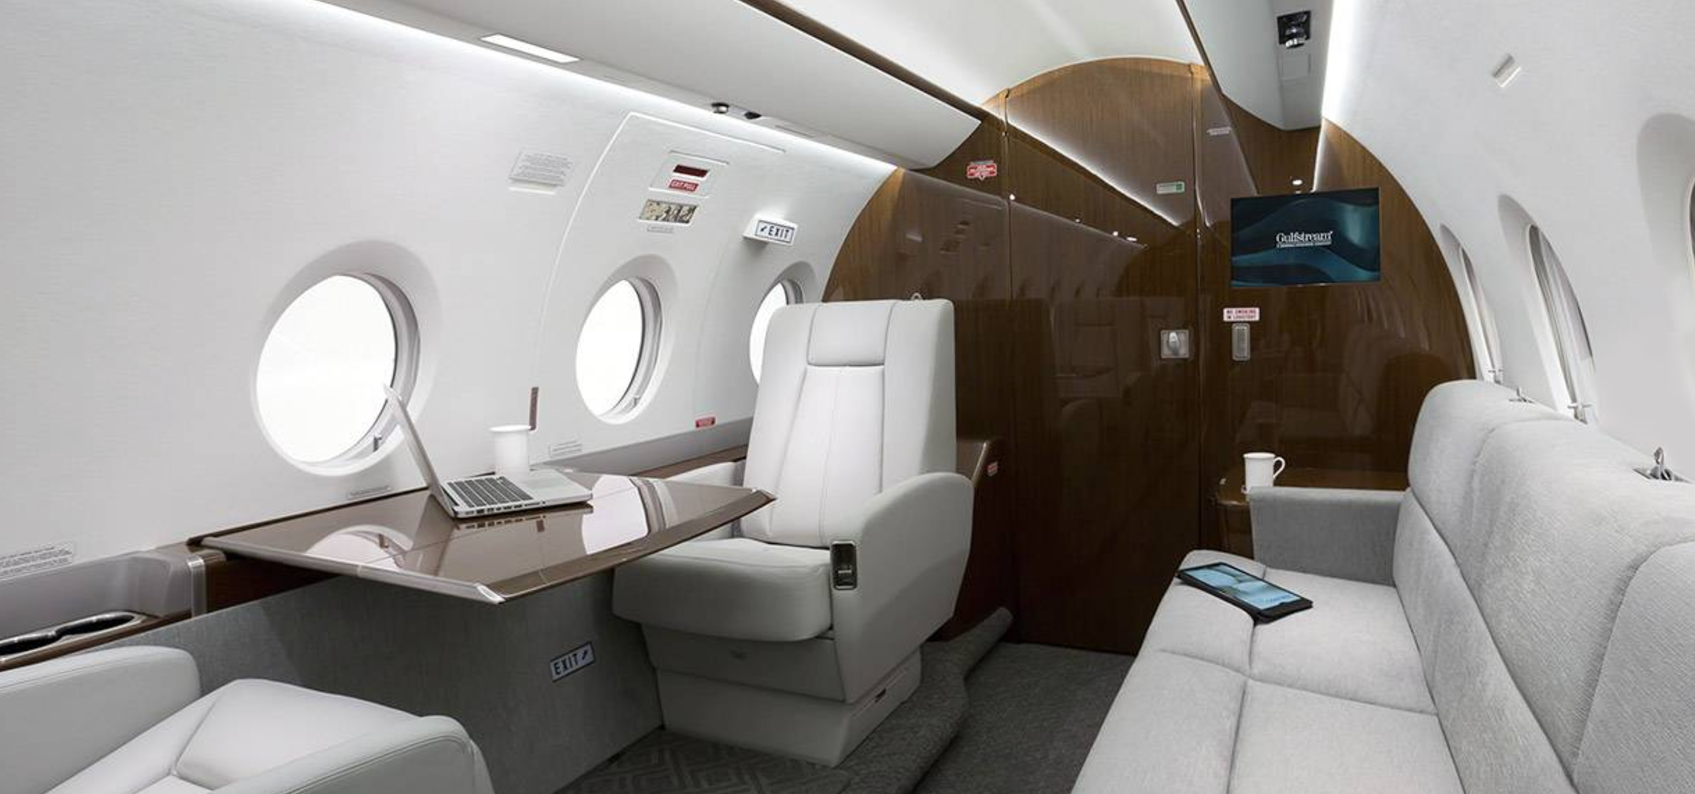 Gulfstream g280 interior